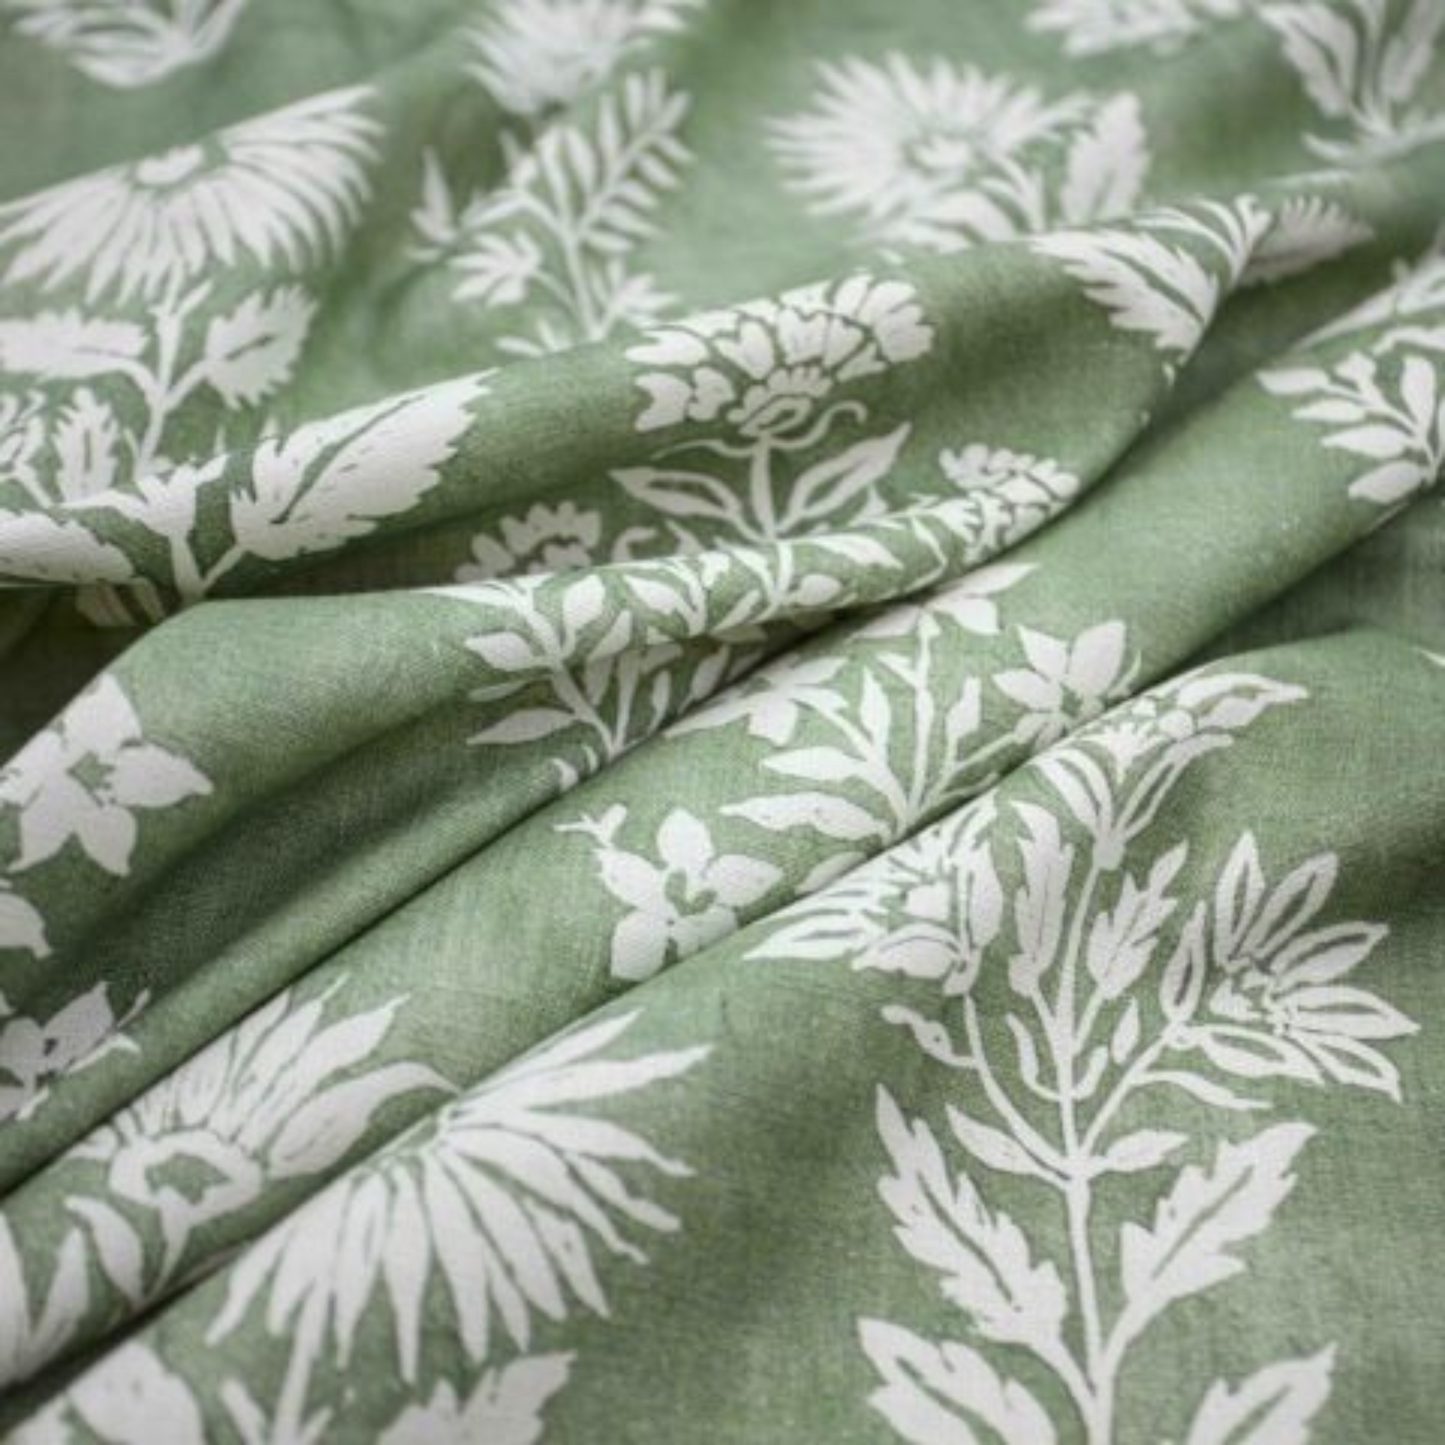 Botanical Floral Batik in Olive Green | Organic Modern Decor | Block Print Inspired | Available in Lumbar, Bolster, Throw, Euro Sham Sizes